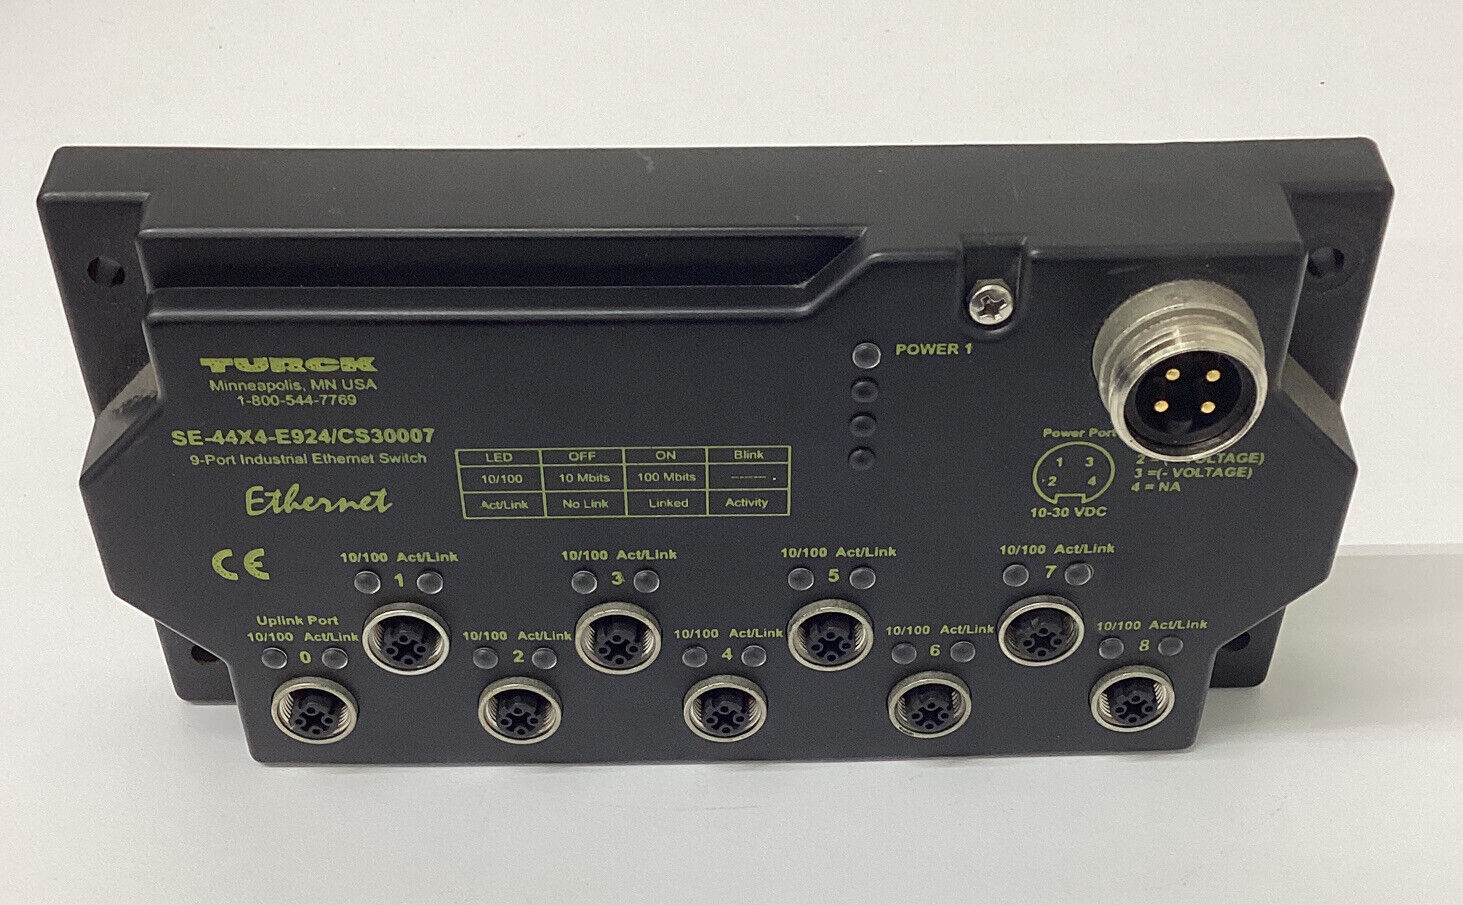 Turck SE-44X4-E924 / CS30007  9-Port Industrial Ethernet Switch (YE246)